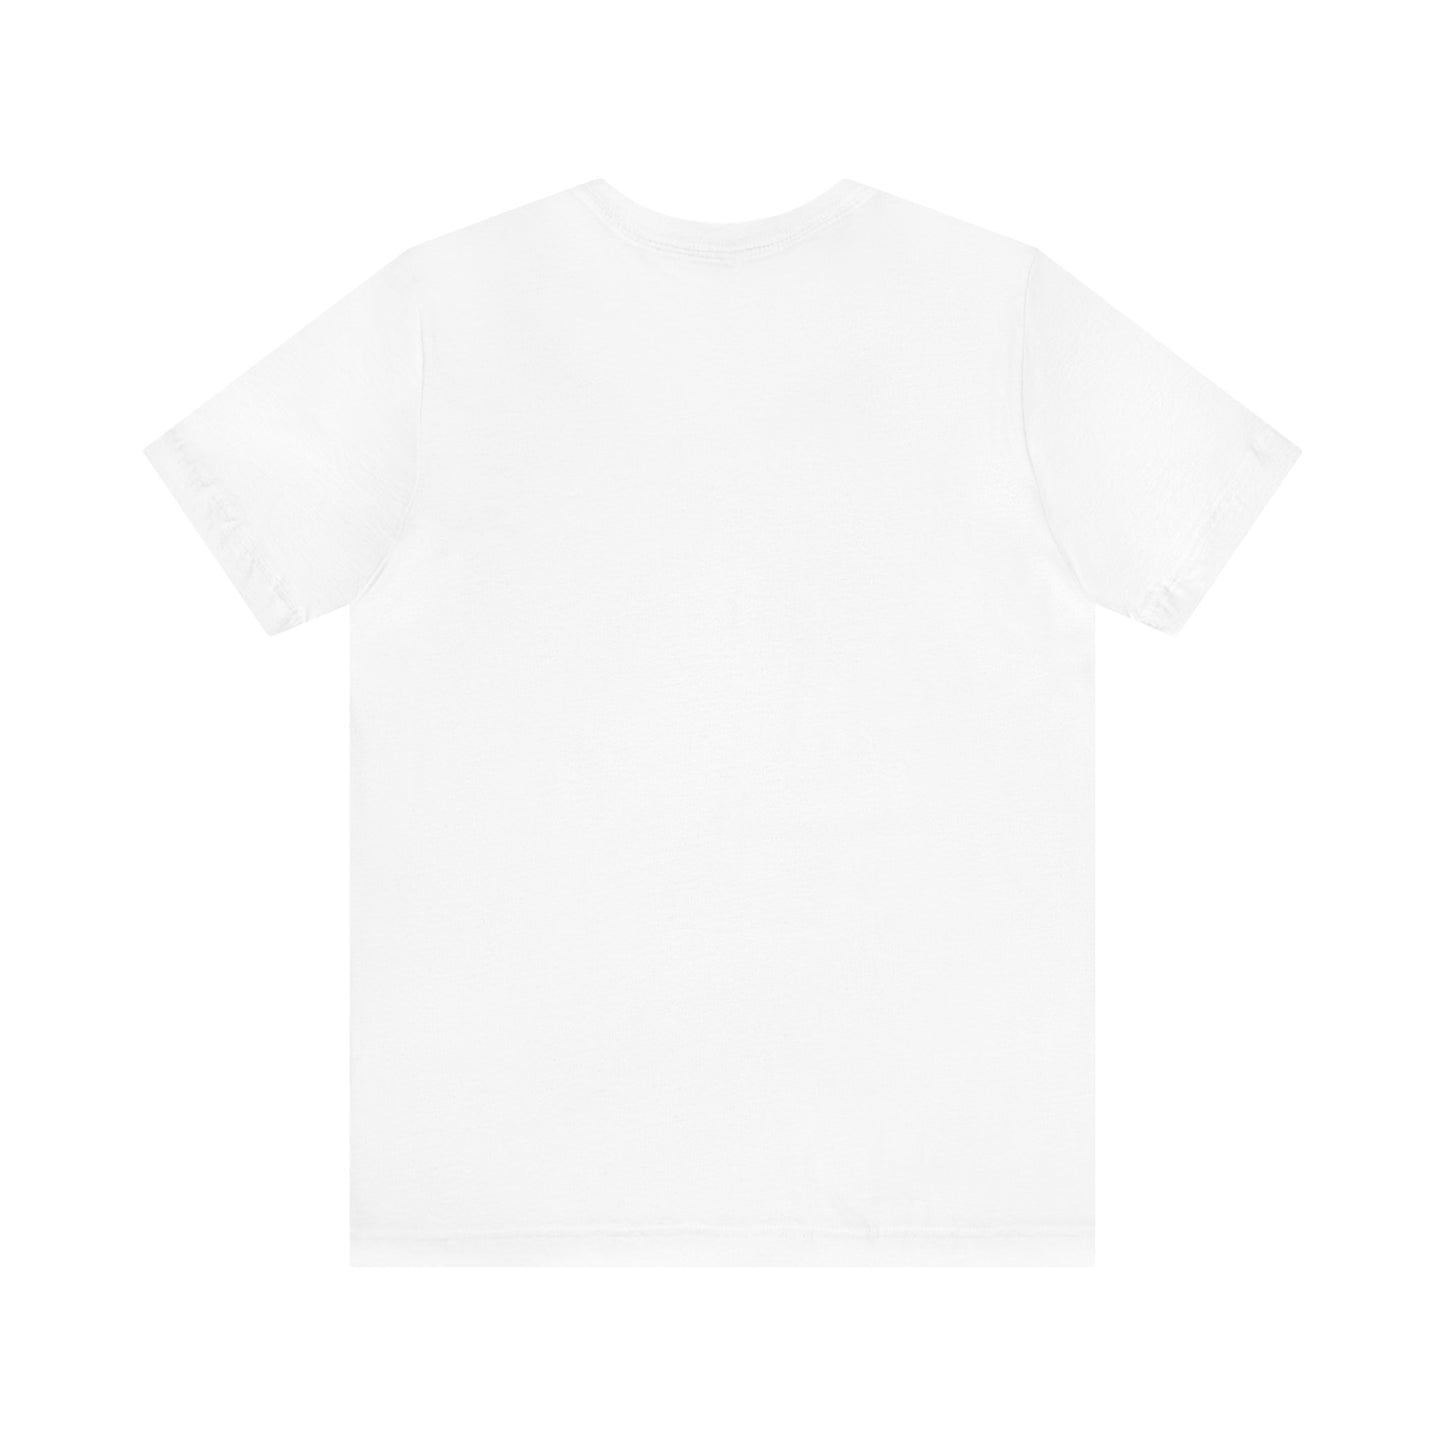 ILikeCheese3434 Unisex T-shirt